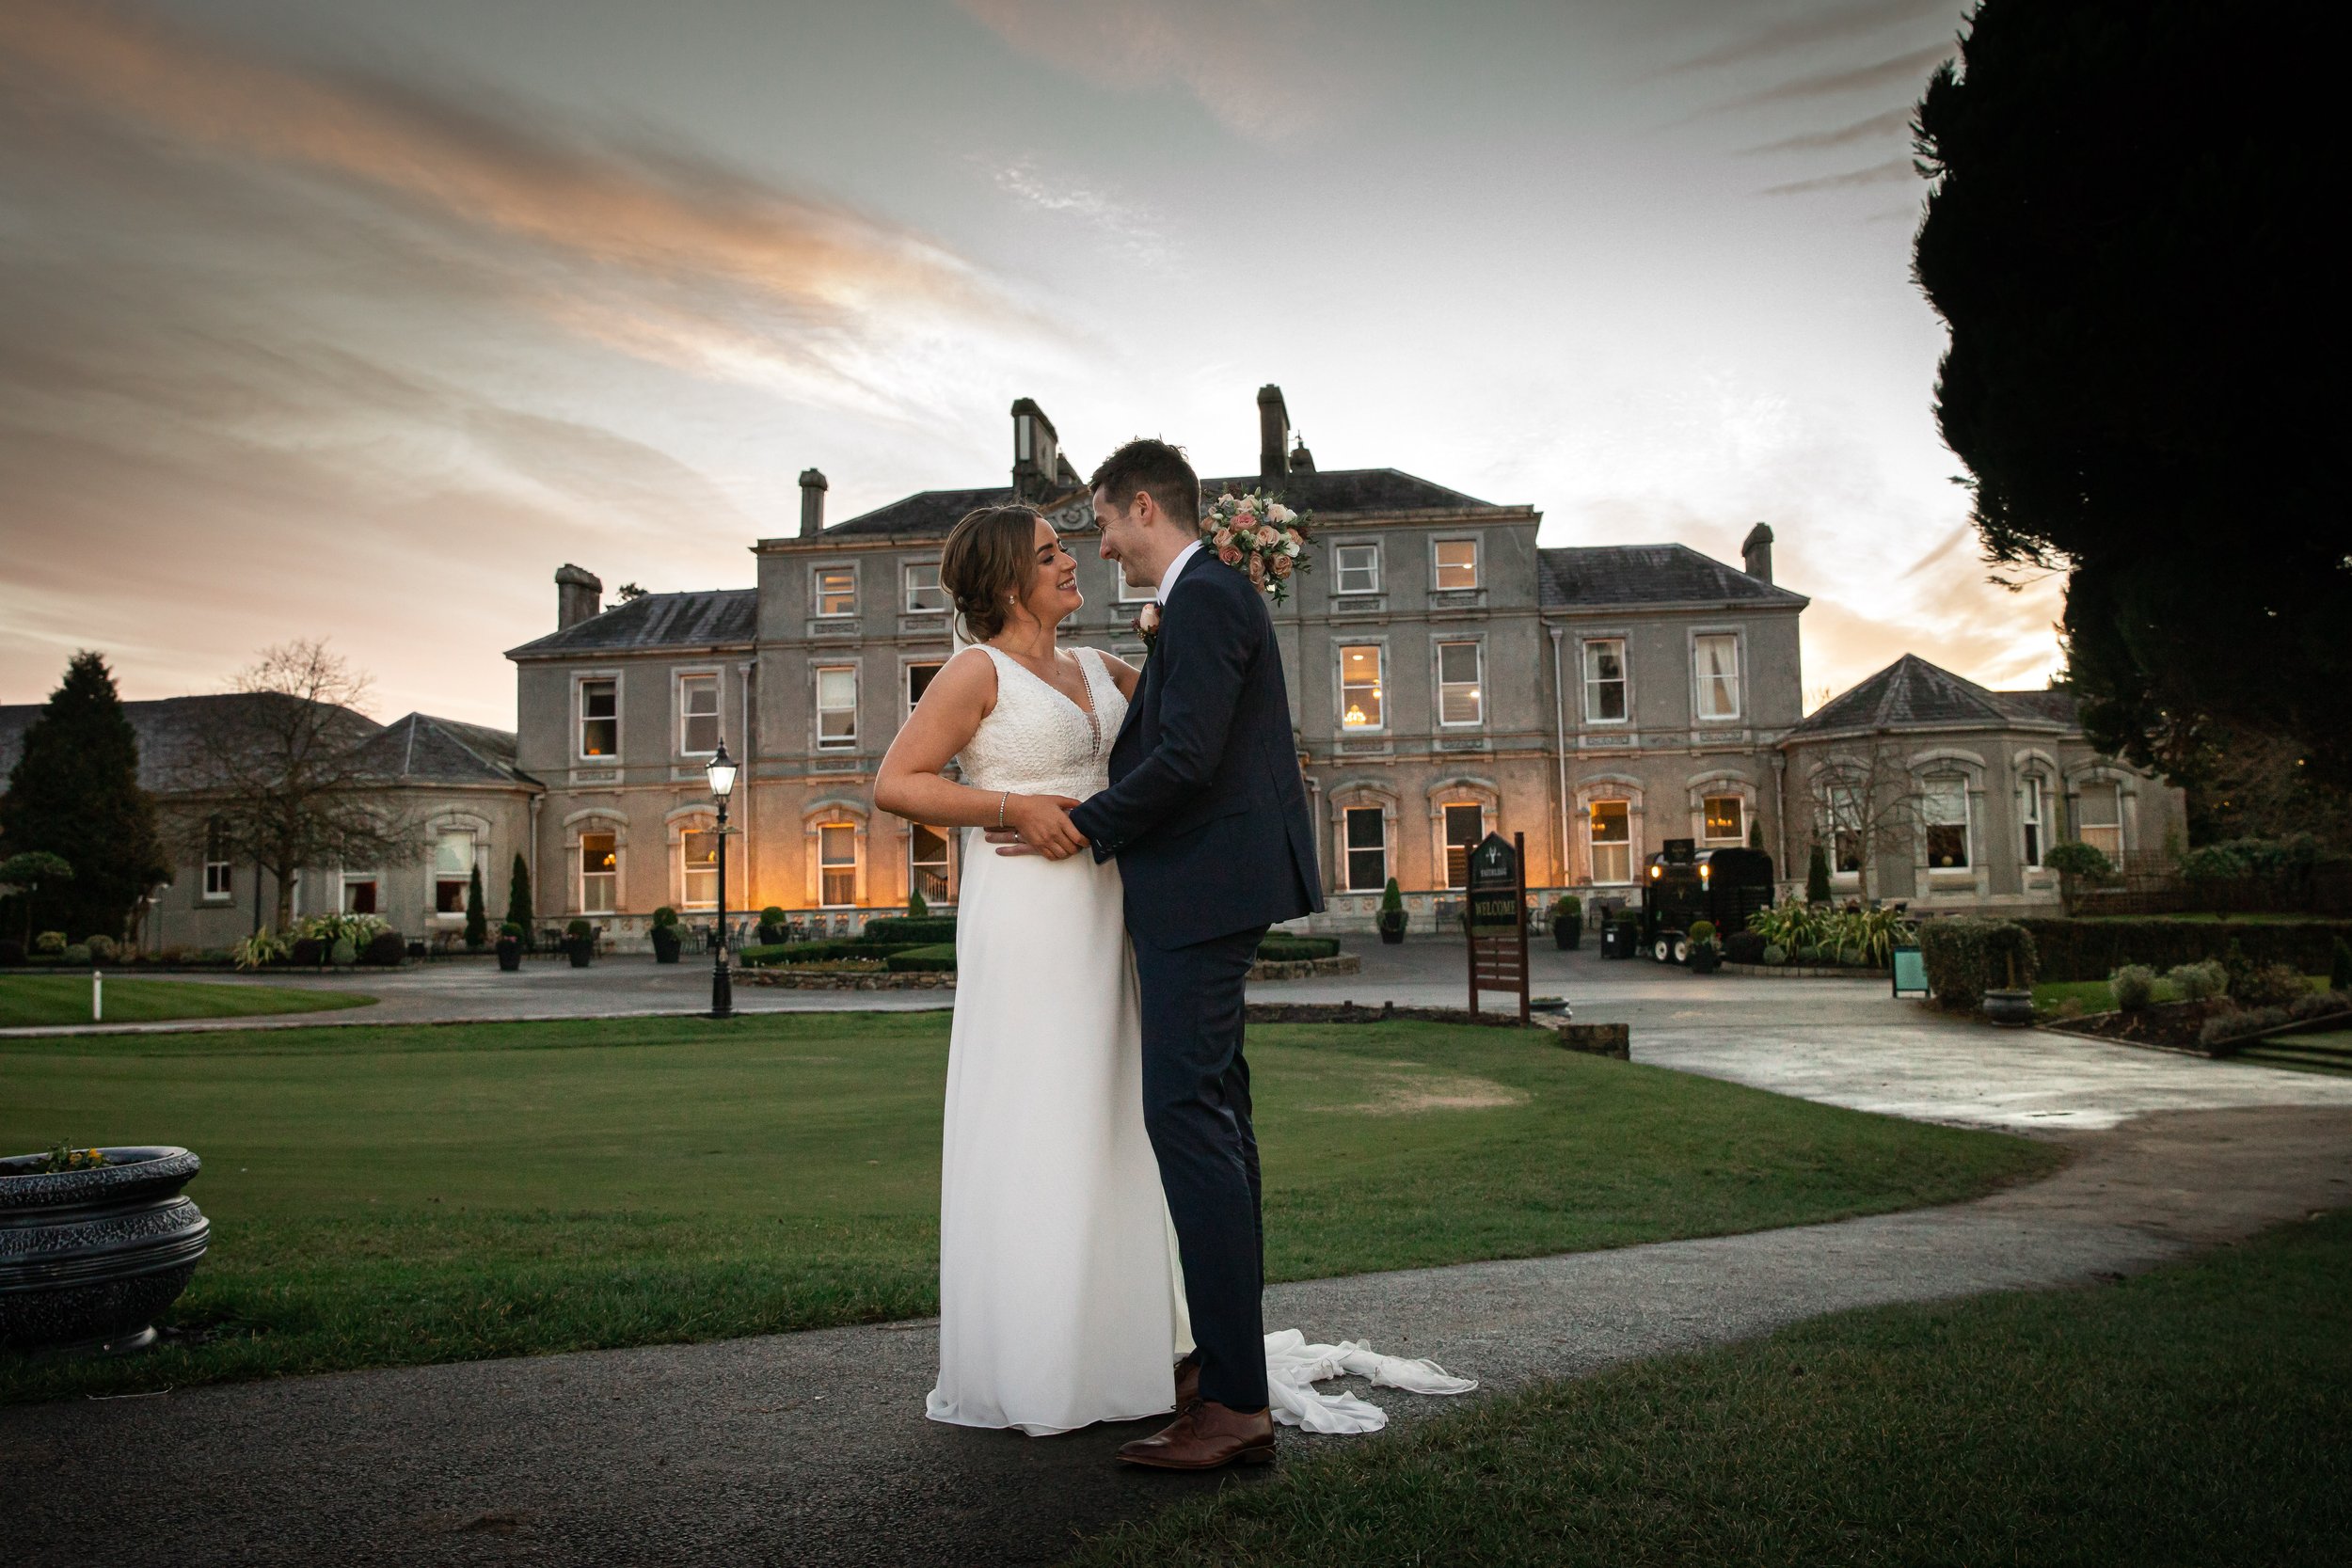 Real Wedding at Faithlegg House by Daragh McCann at Stargaze Photography in Kilkenny 